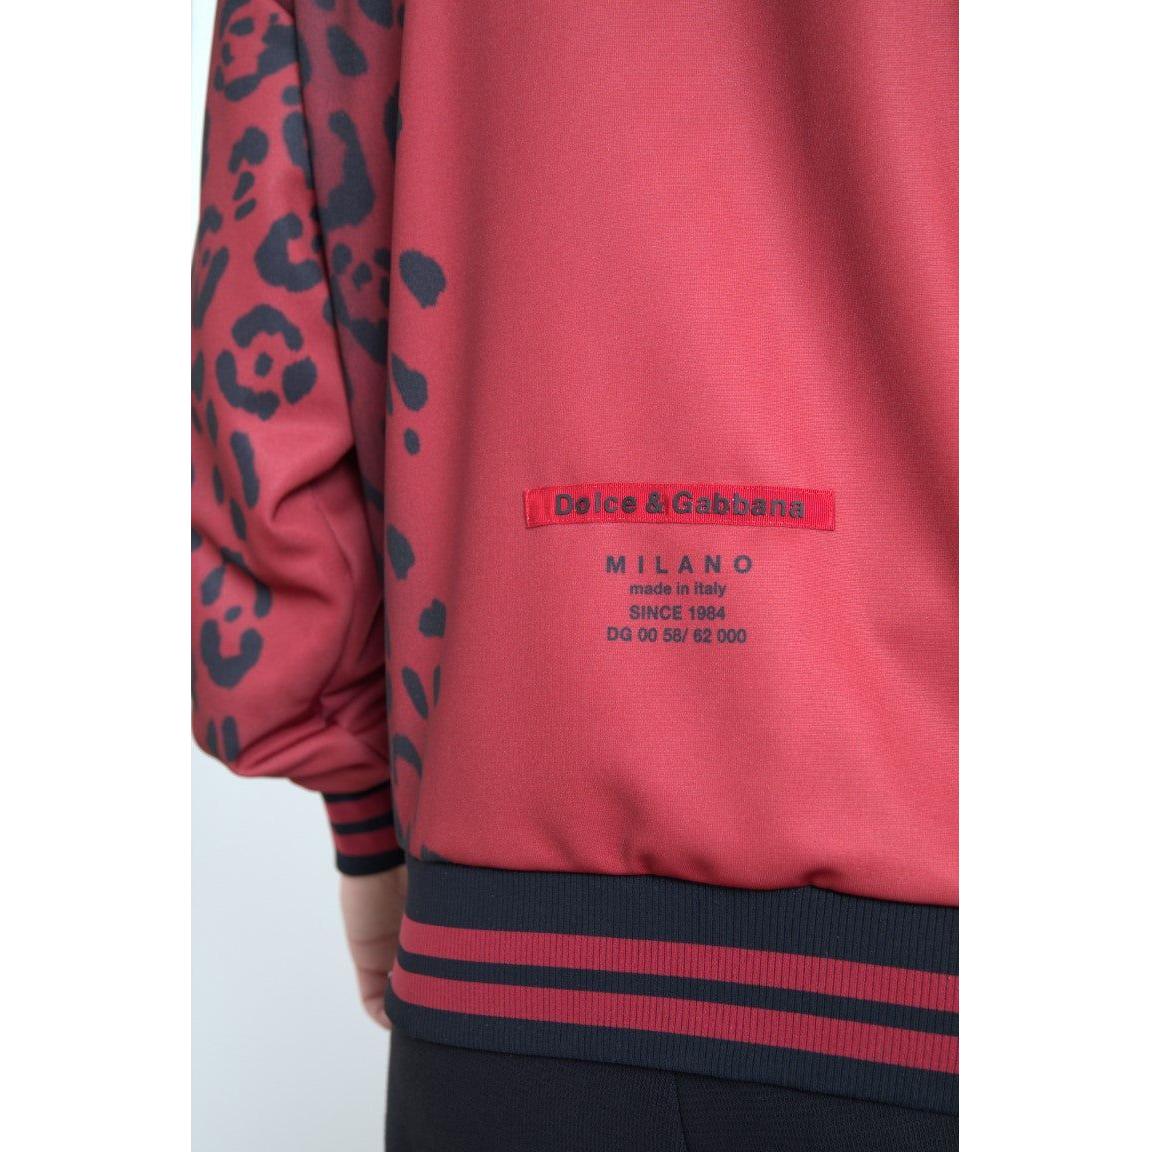 Dolce & Gabbana Red Leopard Print Bomber Jacket red-leopard-polyester-bomber-full-zip-jacket